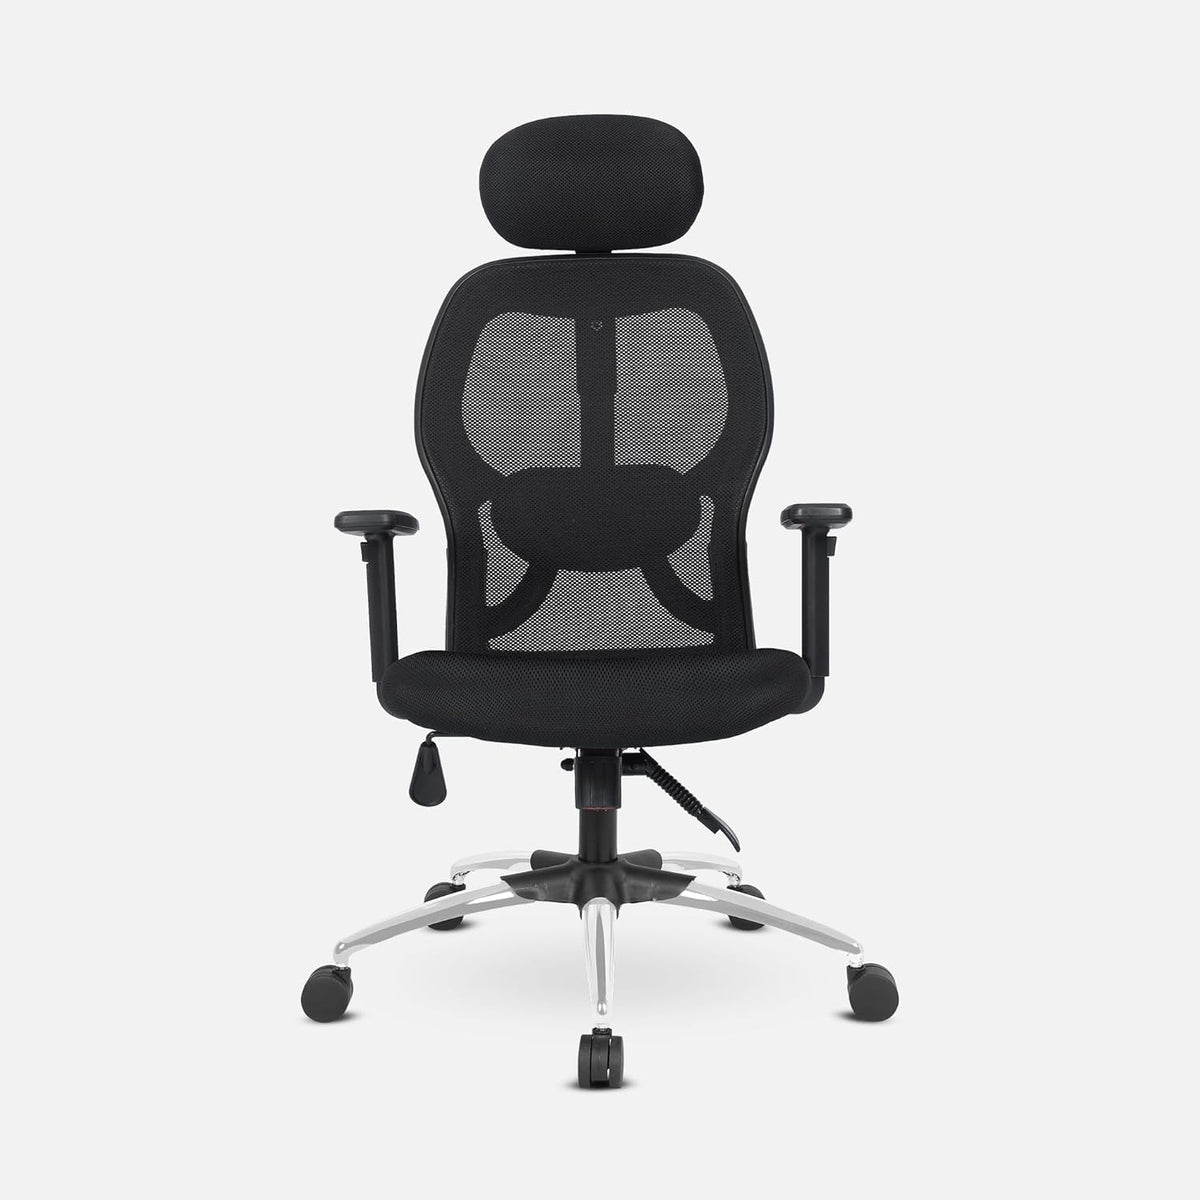 SmileSellers Matrix High Back Office Chair | High Back Mesh Ergonomic Home Office Desk Chair | 2D Adjustable Armrests | Superb Lumbar Support | Knee-Tilt Mechanism